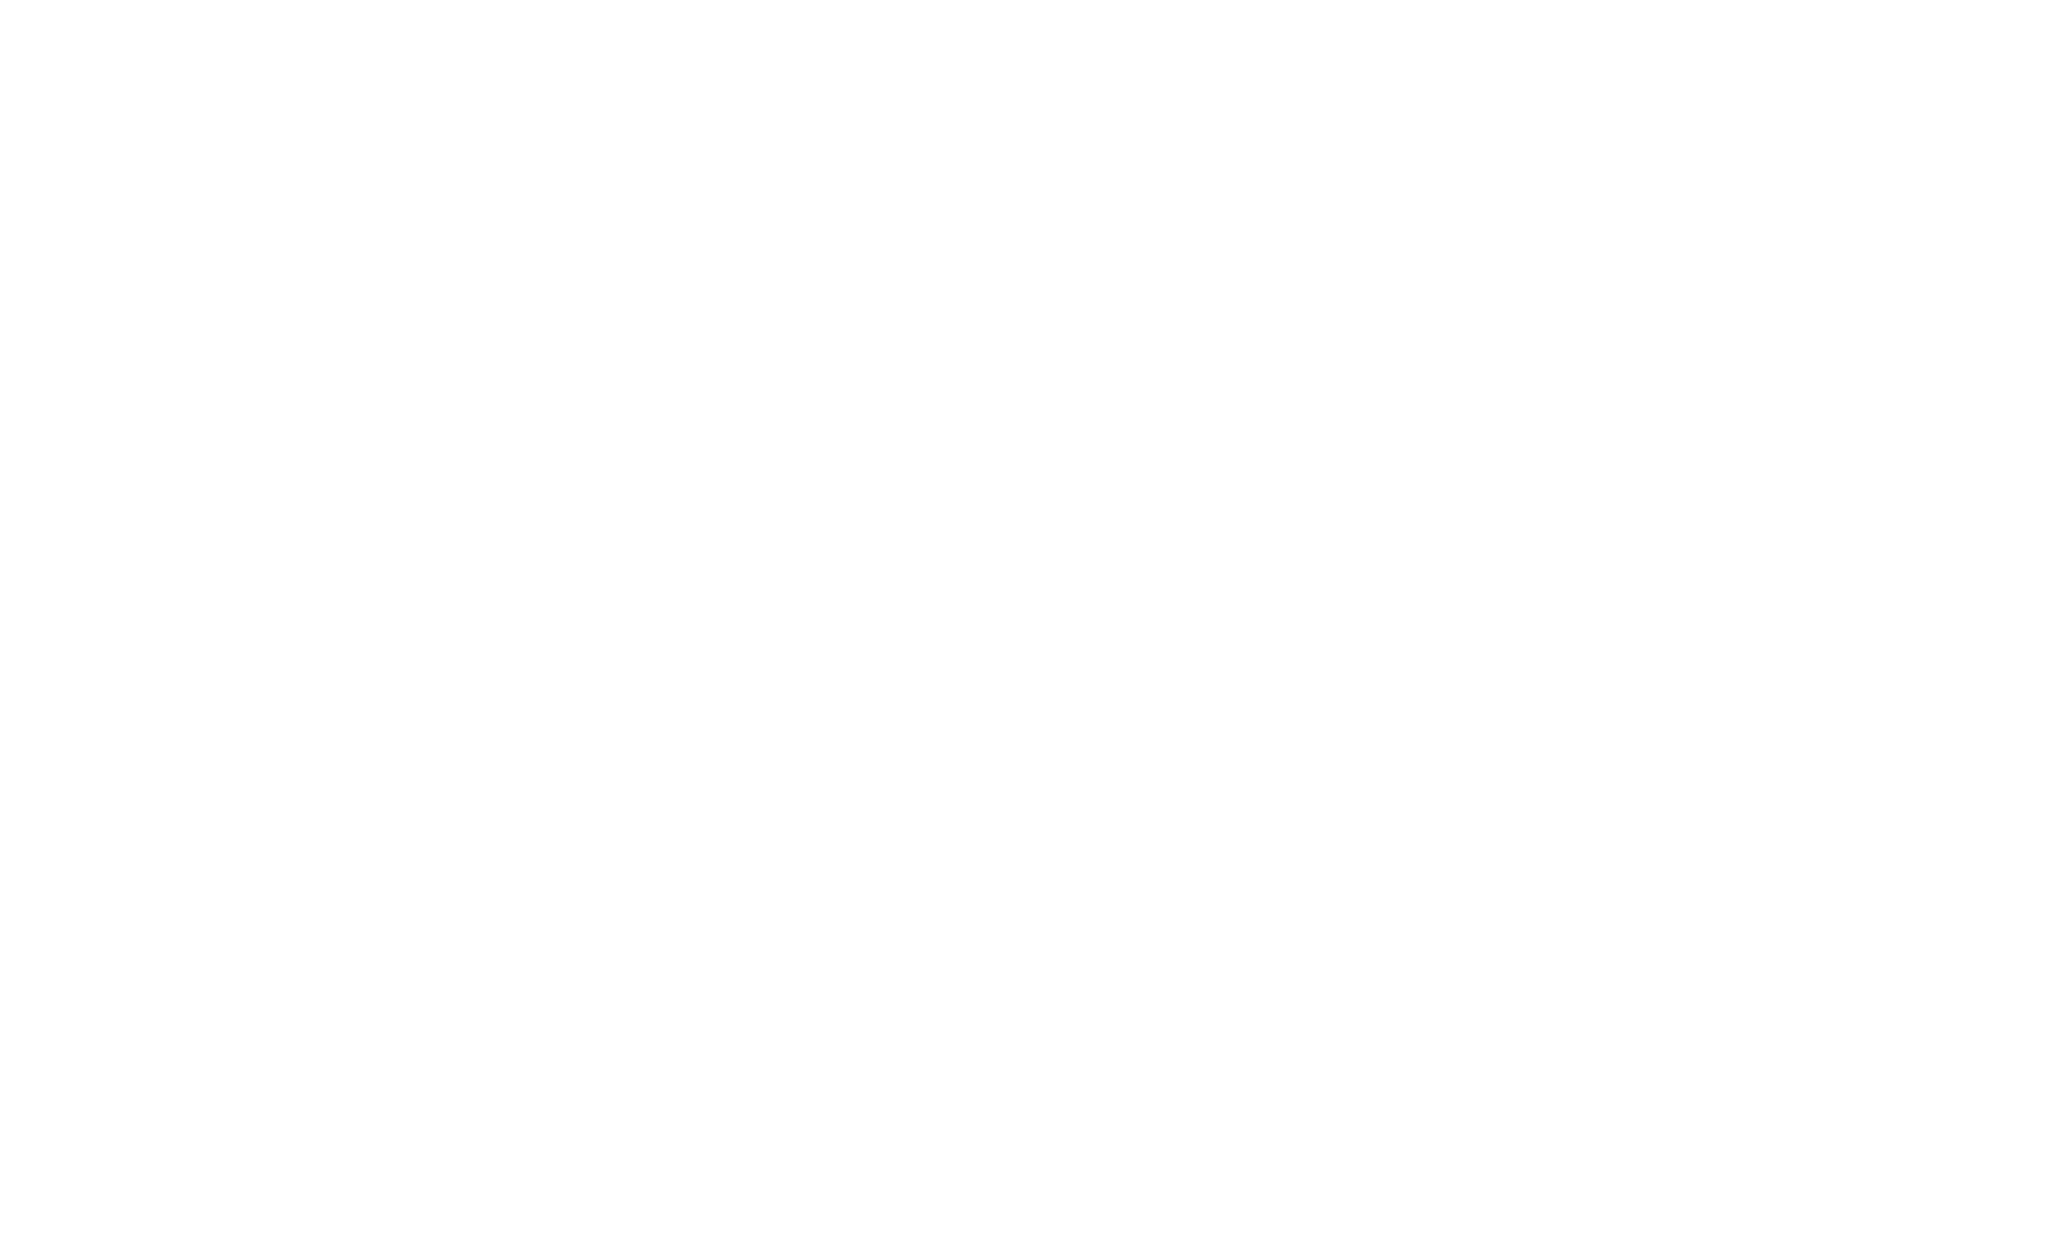 Clara's Heart logo